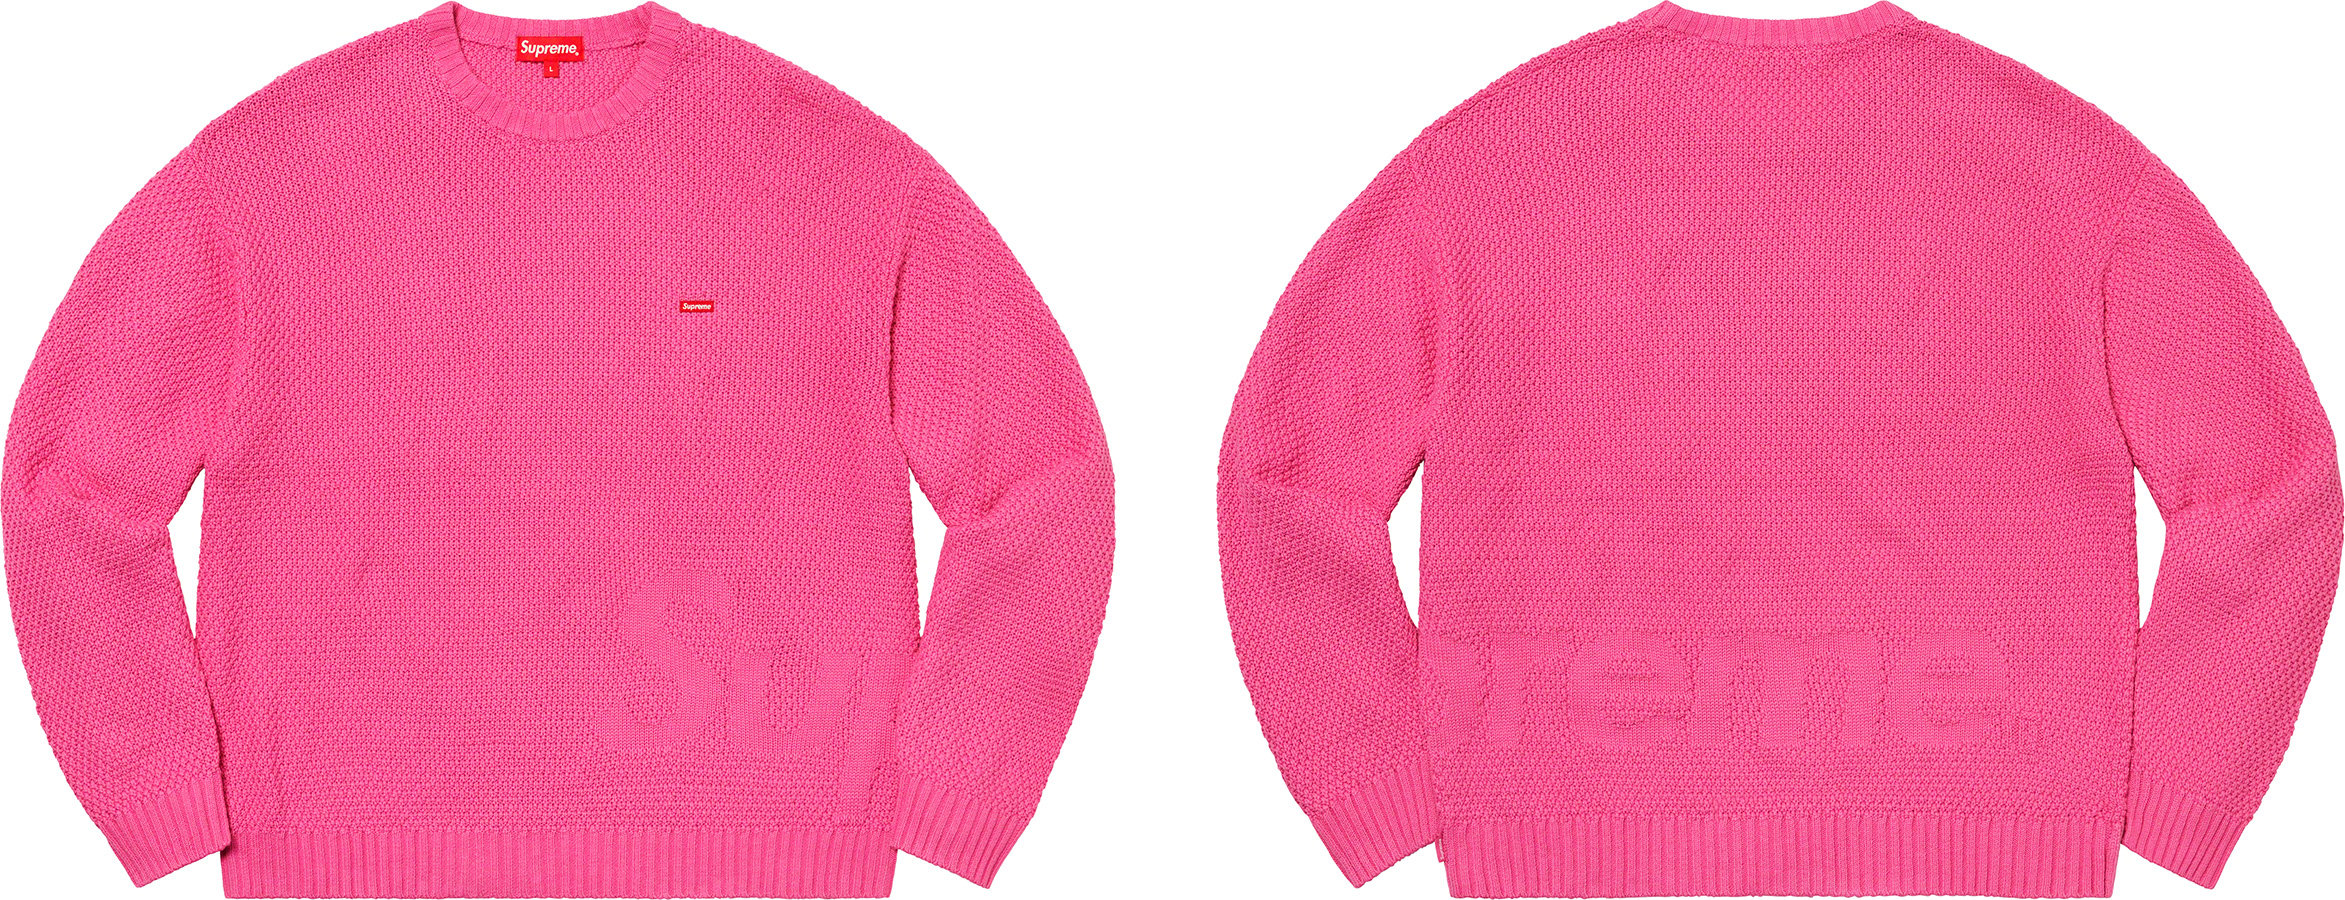 Textured Small Box Sweater - fall winter 2020 - Supreme